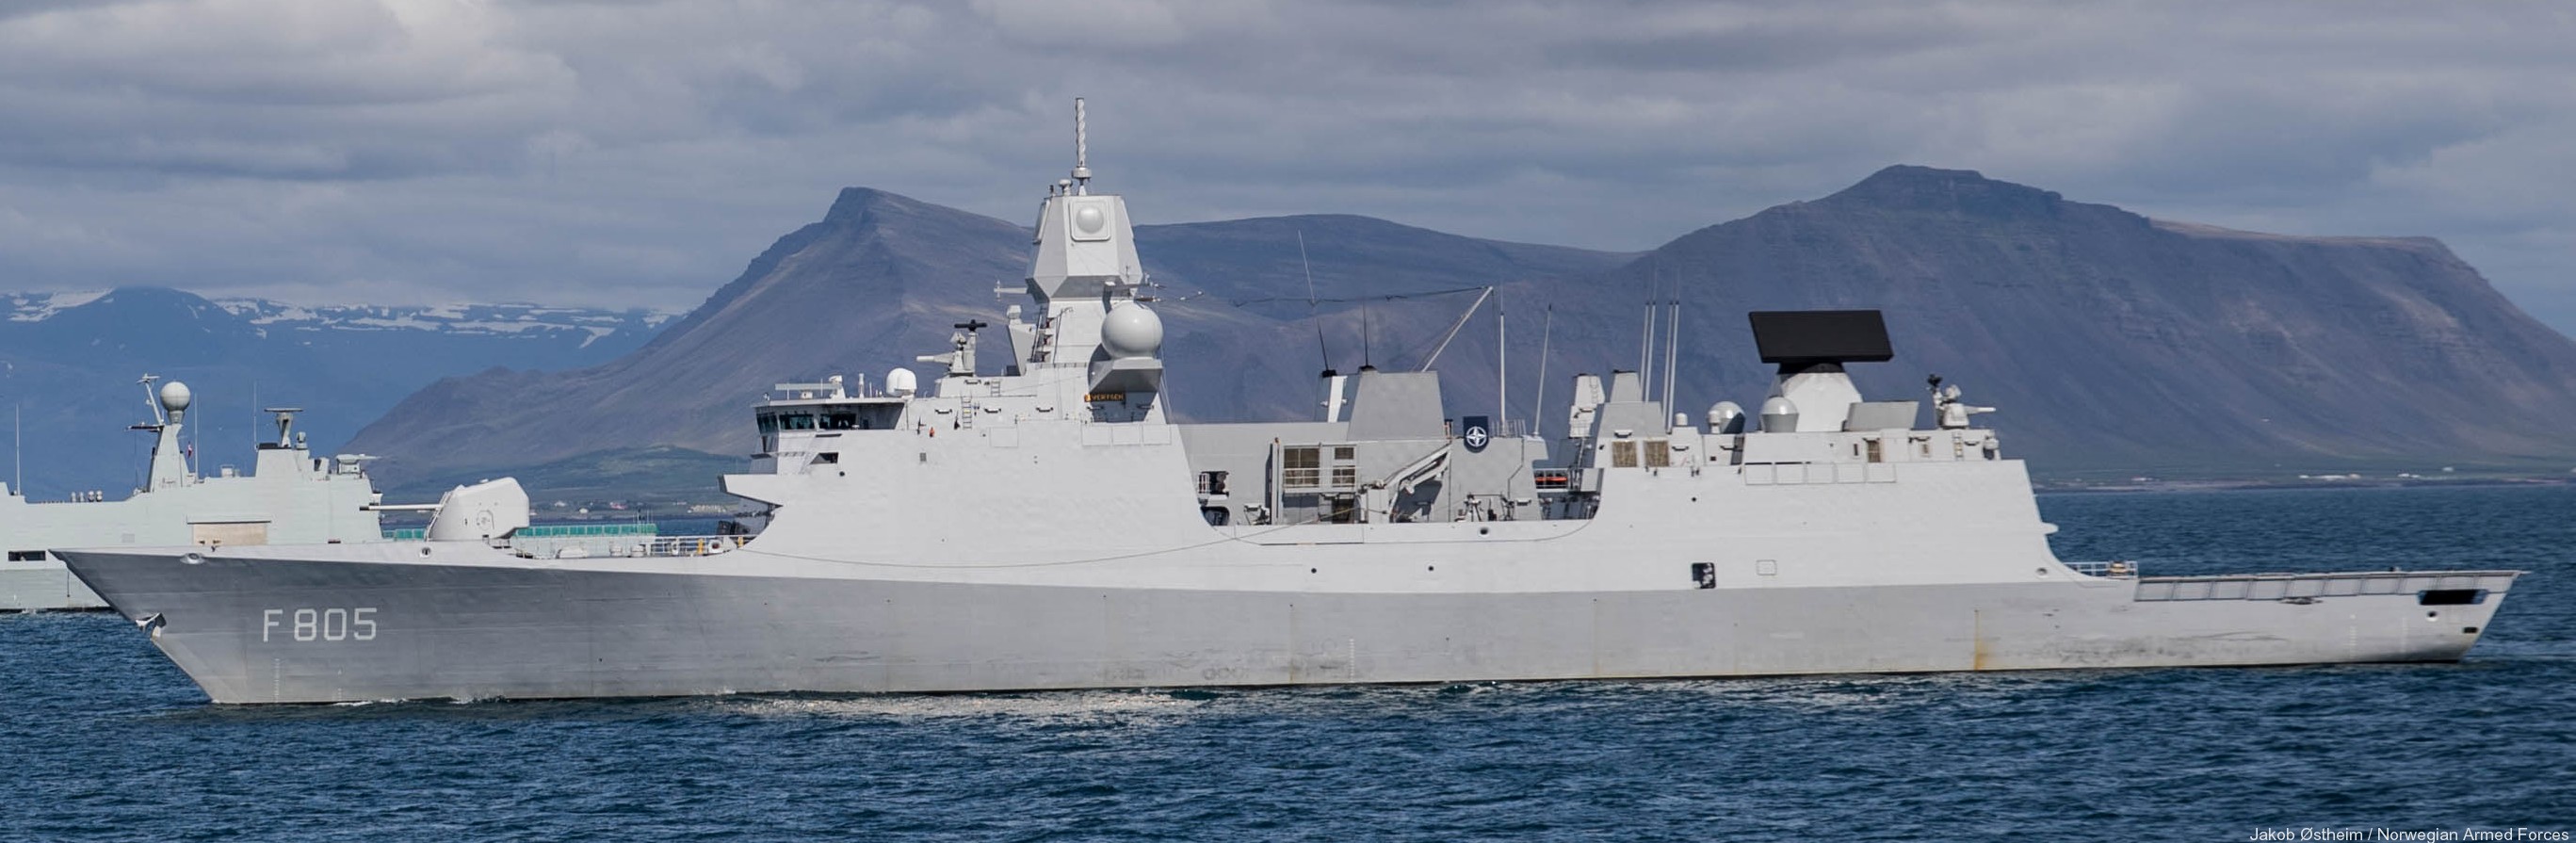 f-805 hnlms evertsen guided missile frigate ffg lcf royal netherlands navy 04